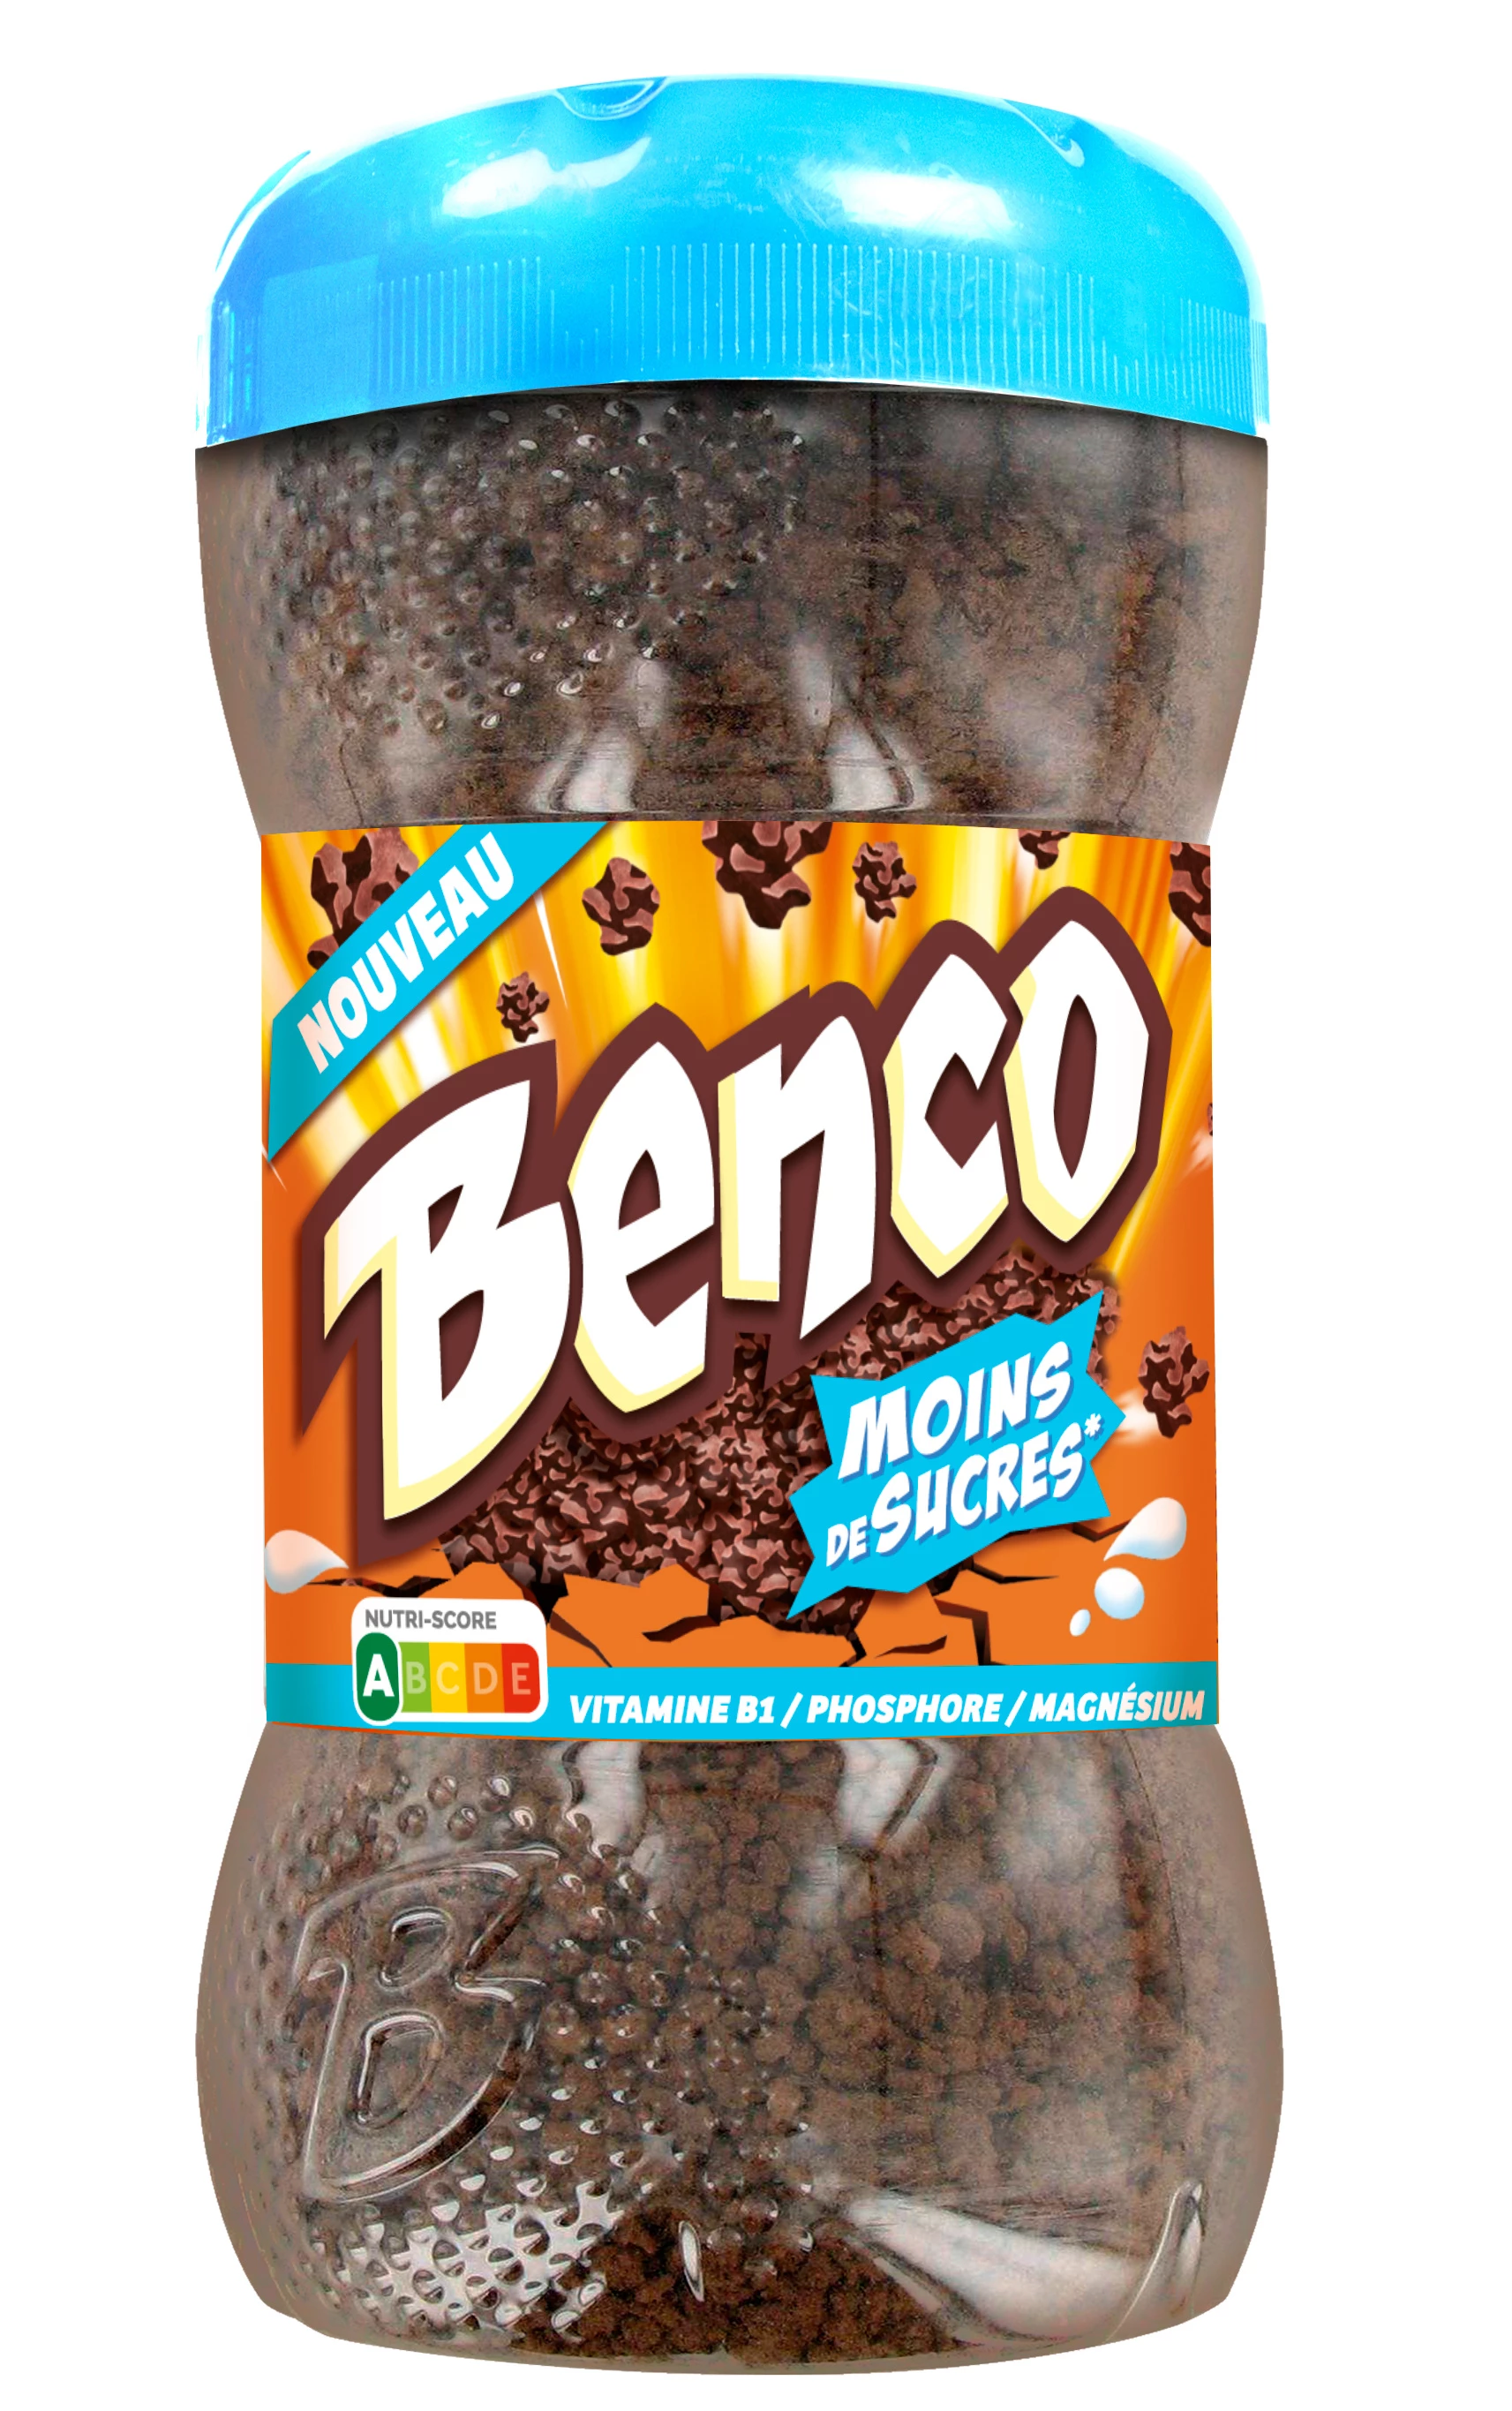 Less Sugar Chocolate Powder, 400g - BENCO